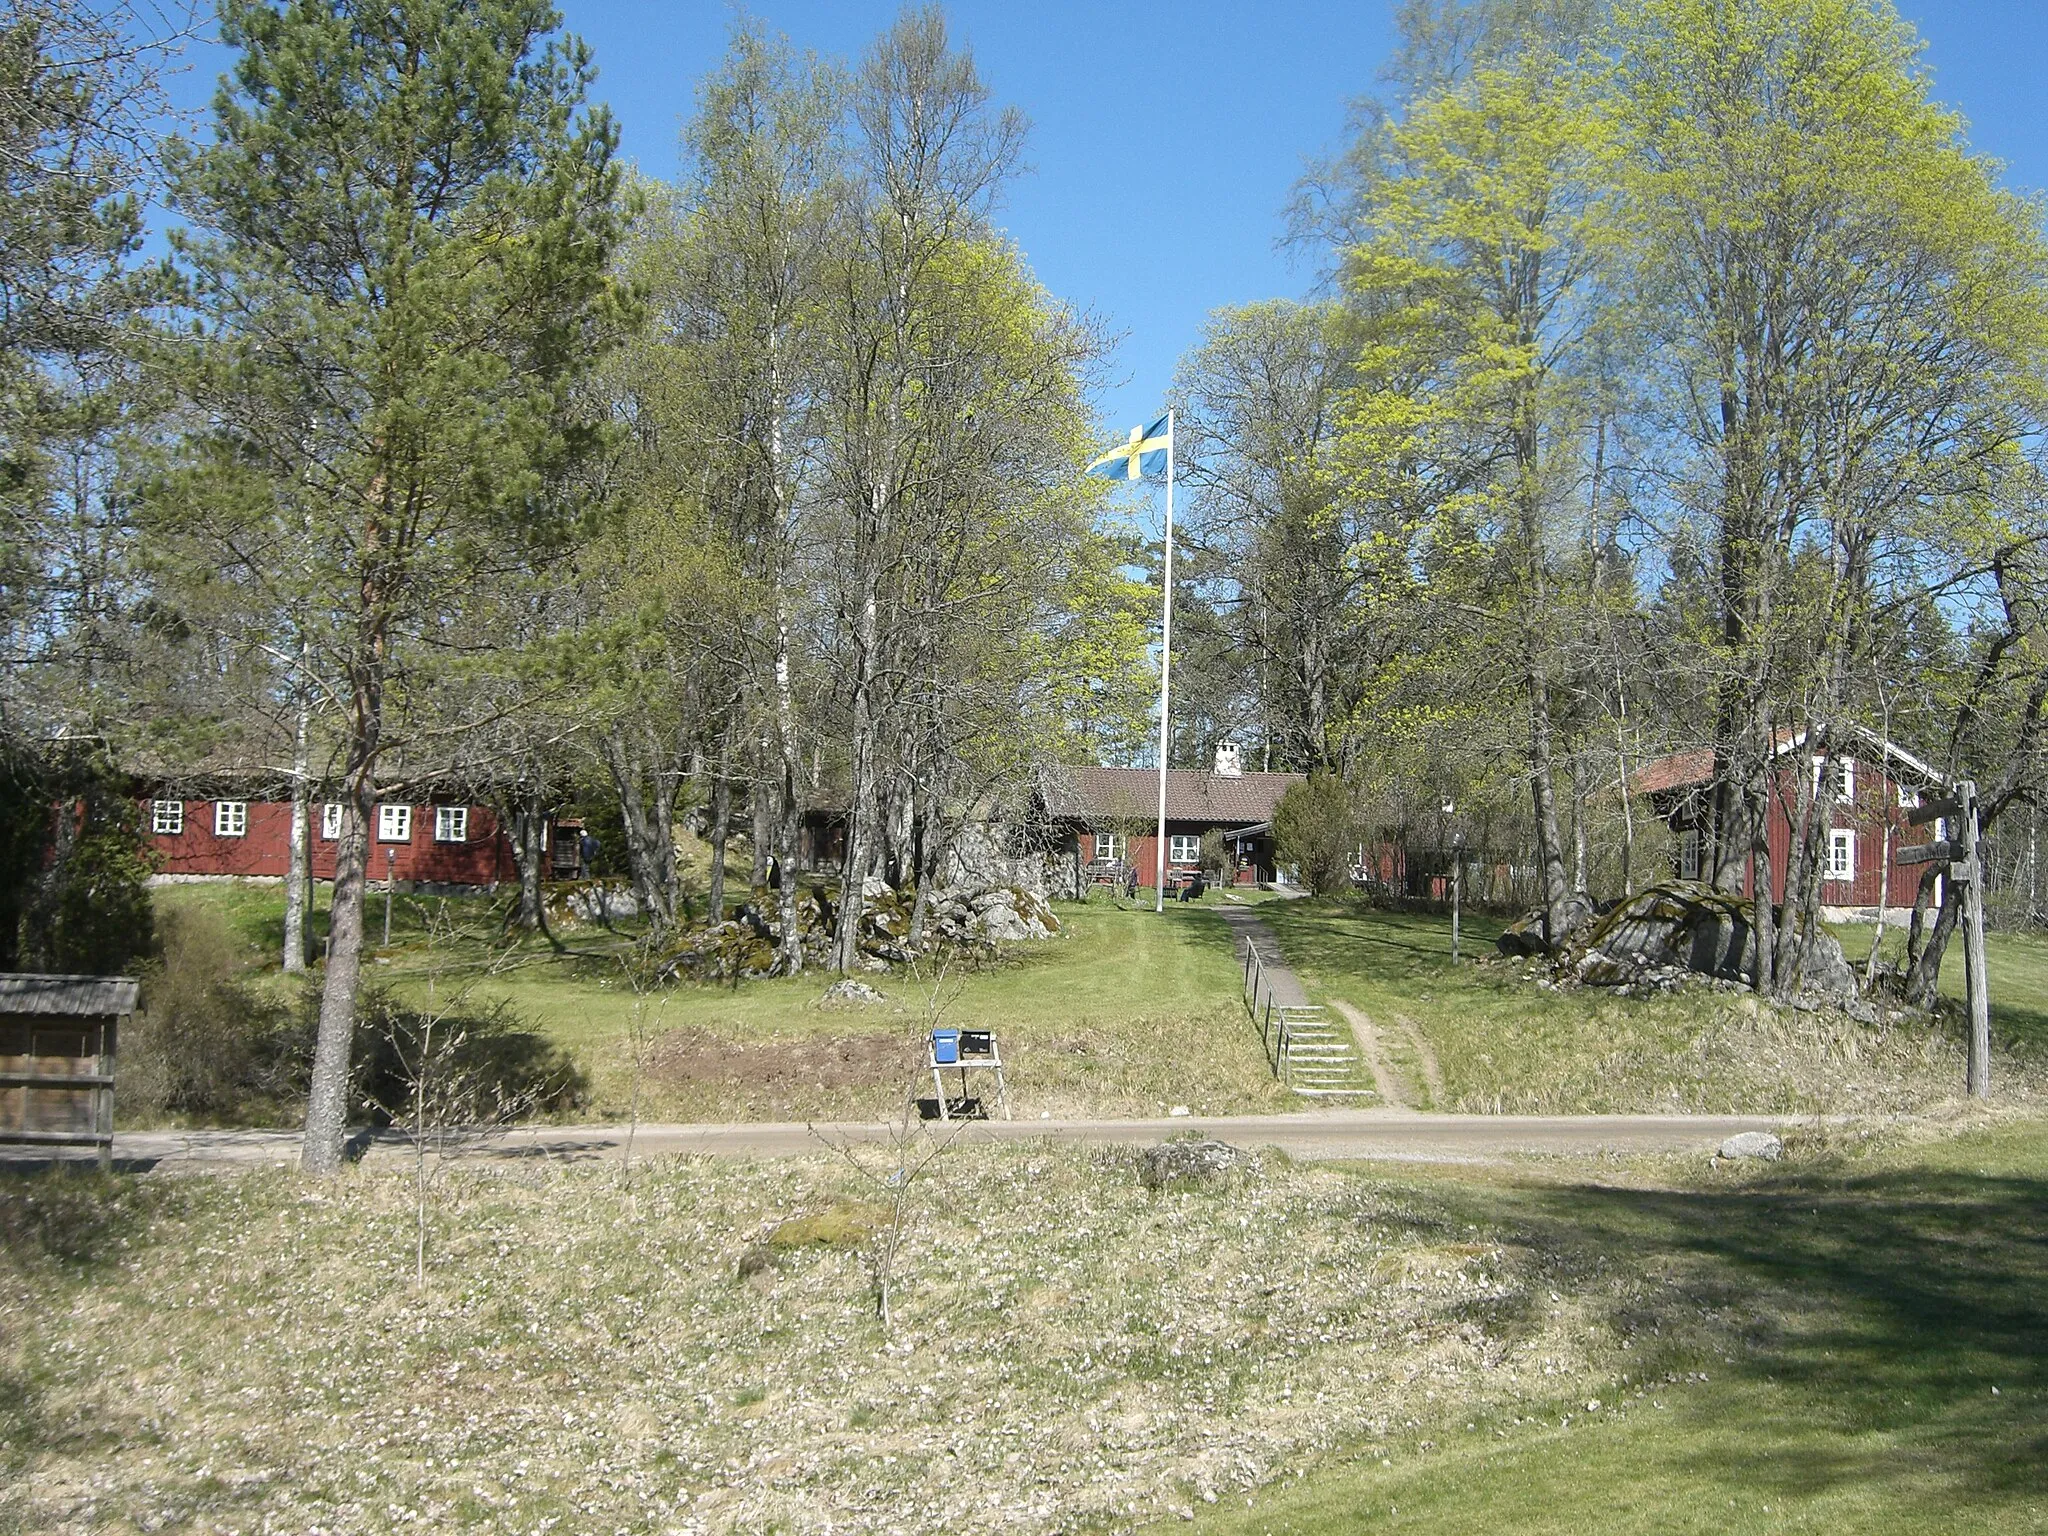 Photo showing: Café in the village of Tivedstorp in Sweden